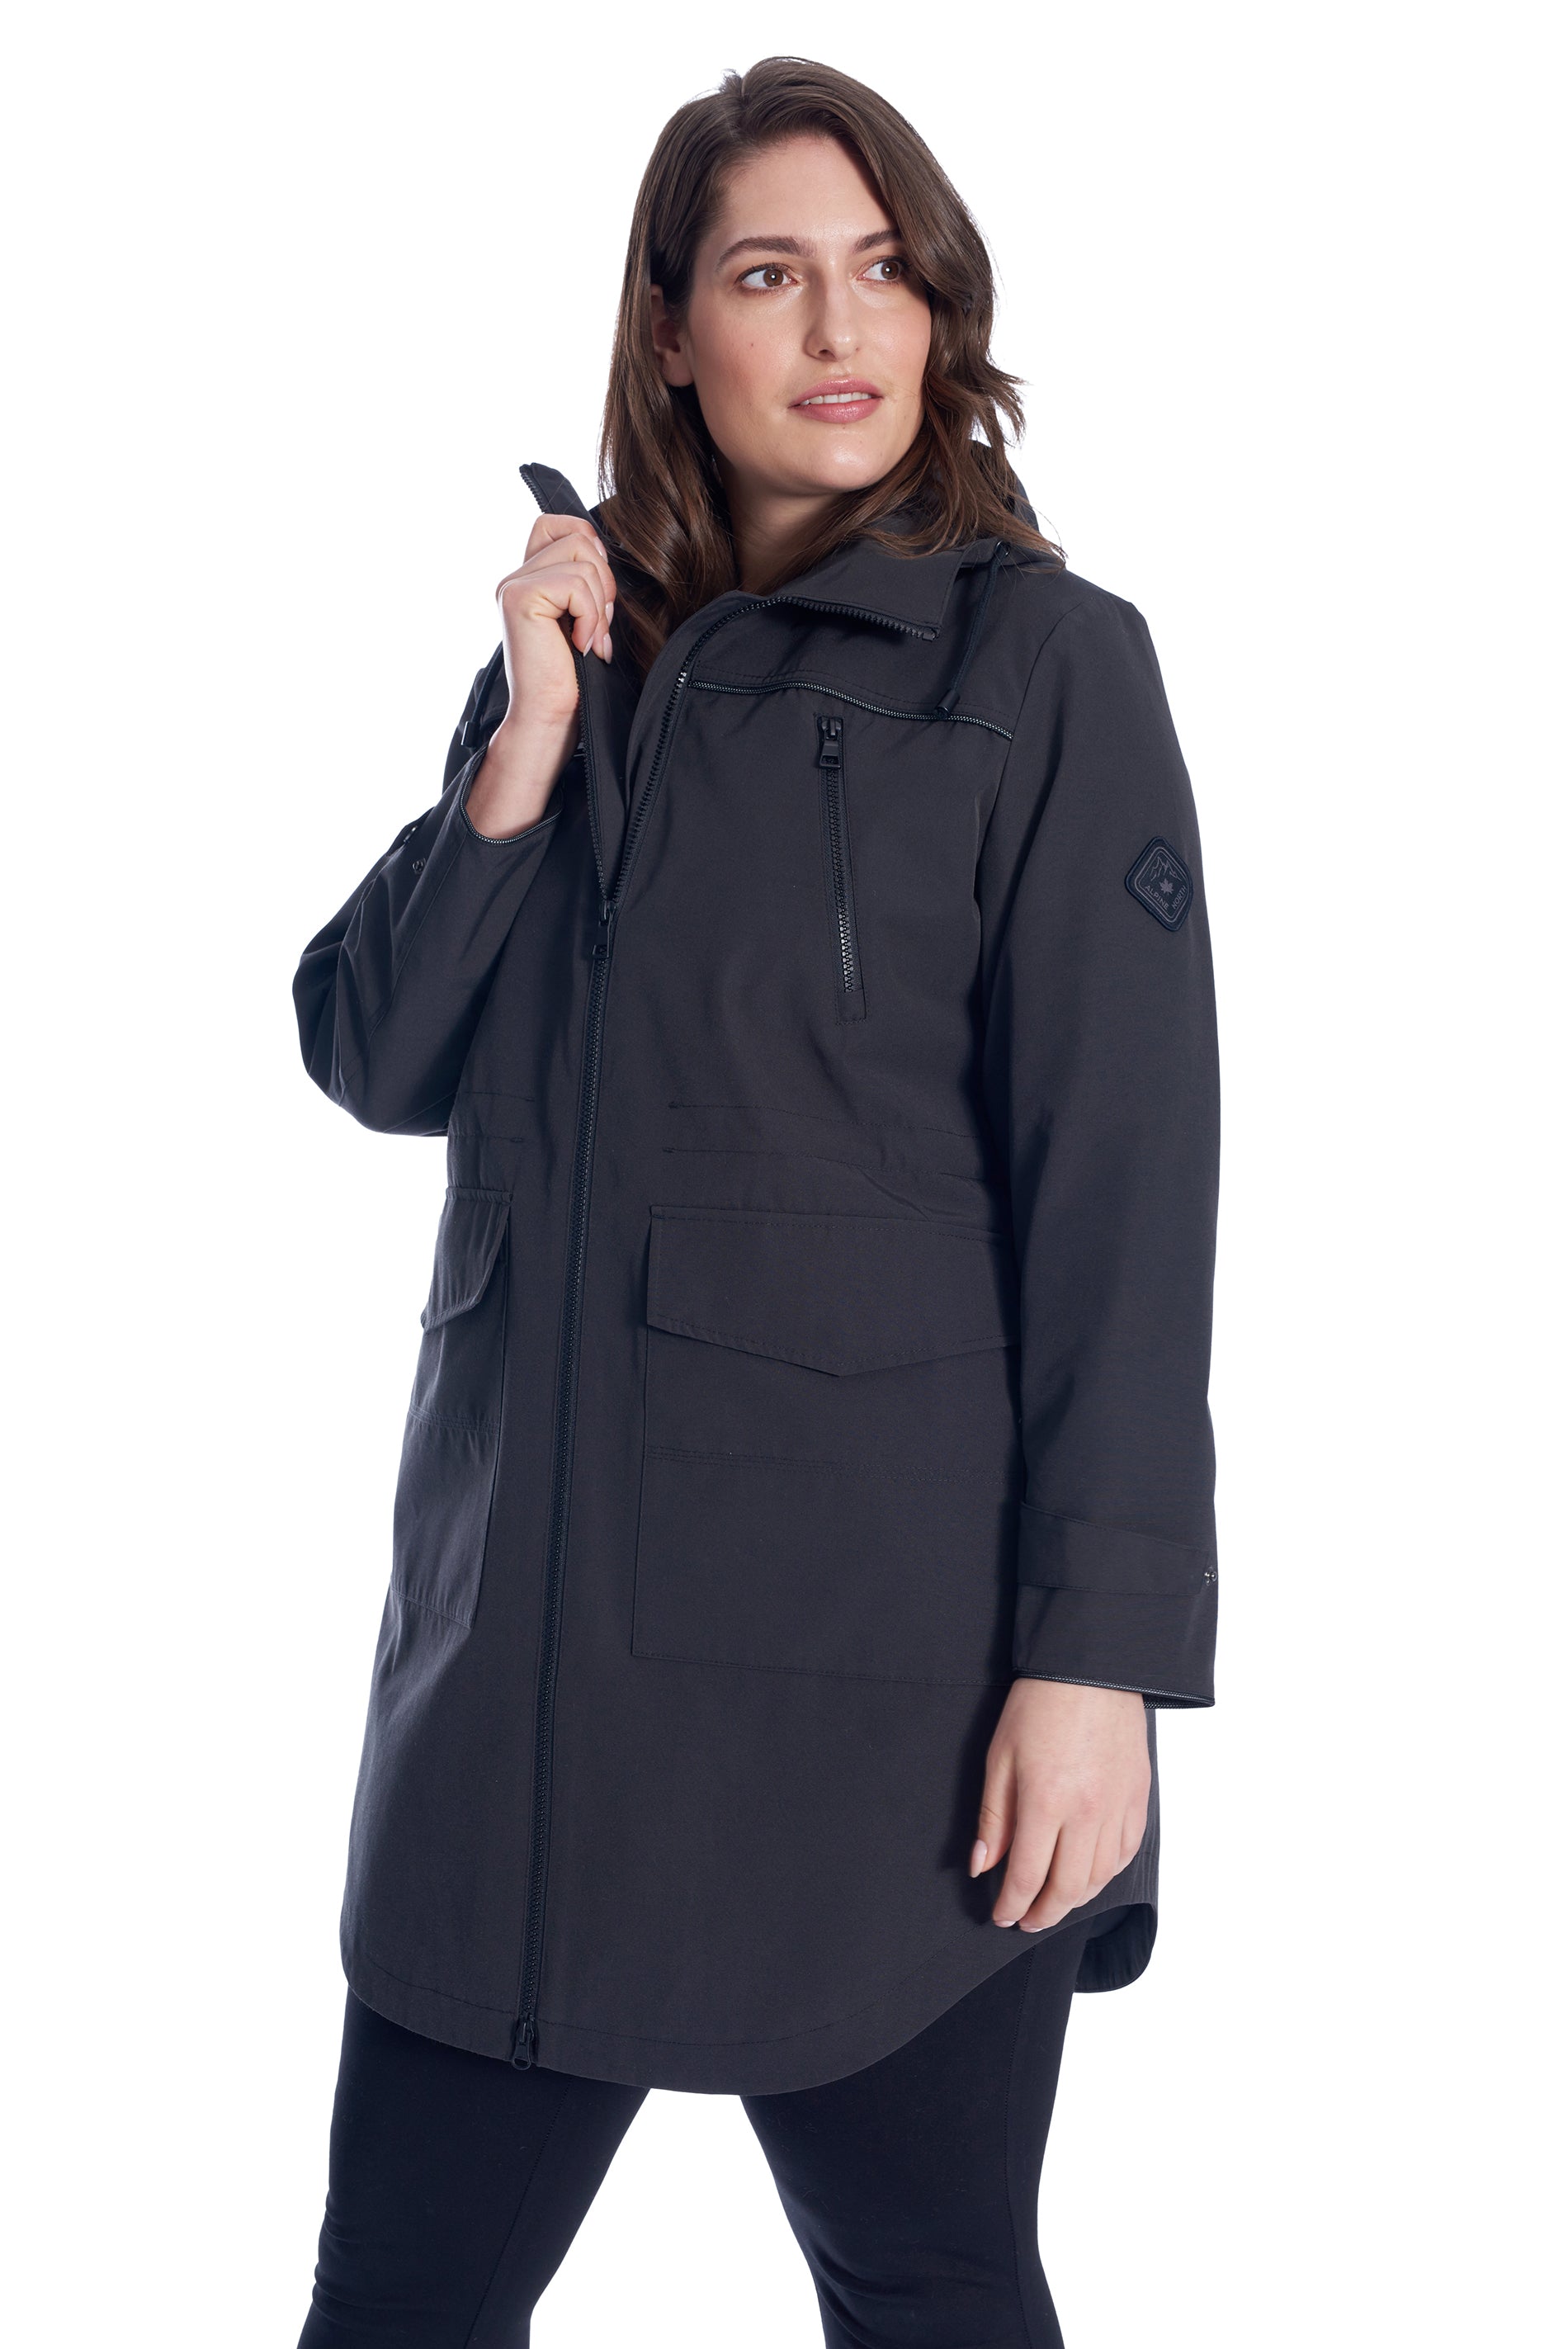 Cht-long Thin Raincoat Men Women/female Ponchos Waterproof Pullover Women's  Breathable Rain Coat Chubasquero Mujer